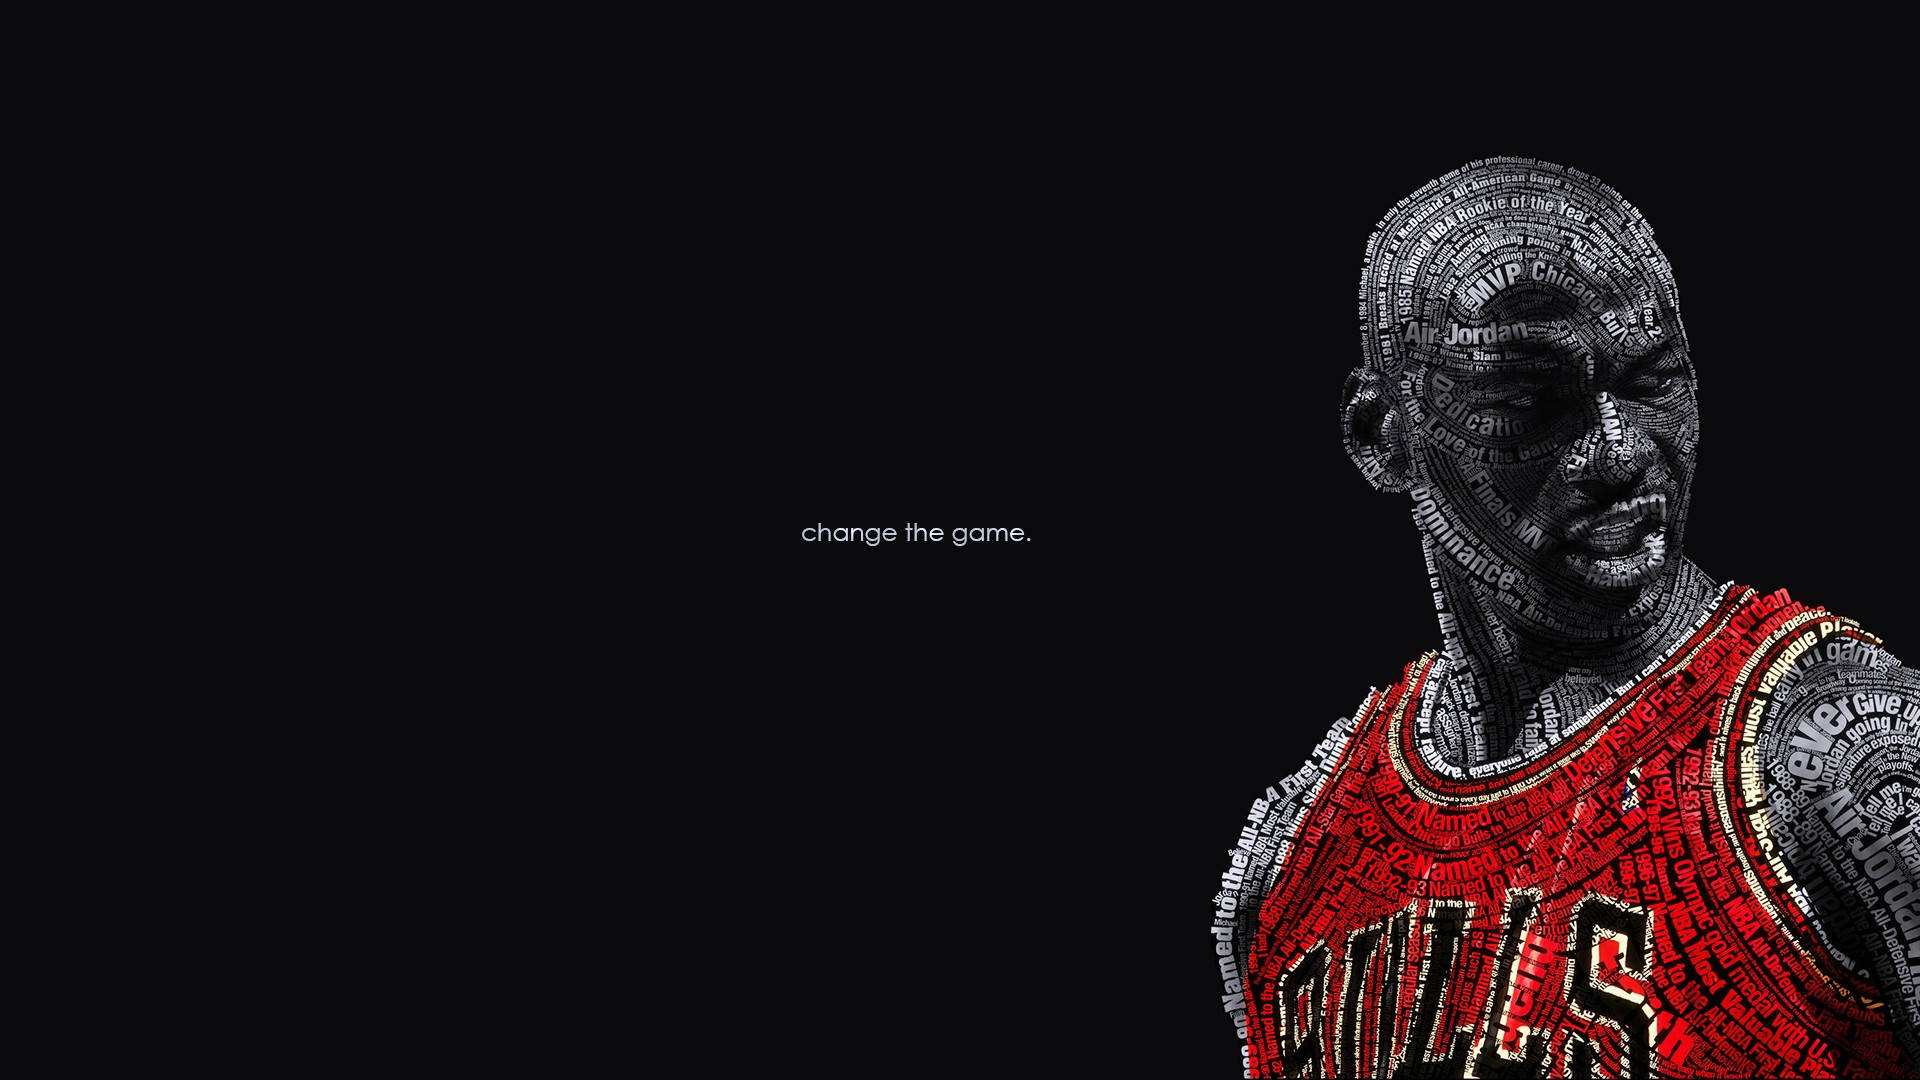 Michael Jordan 1920X1080 Wallpaper and Background Image